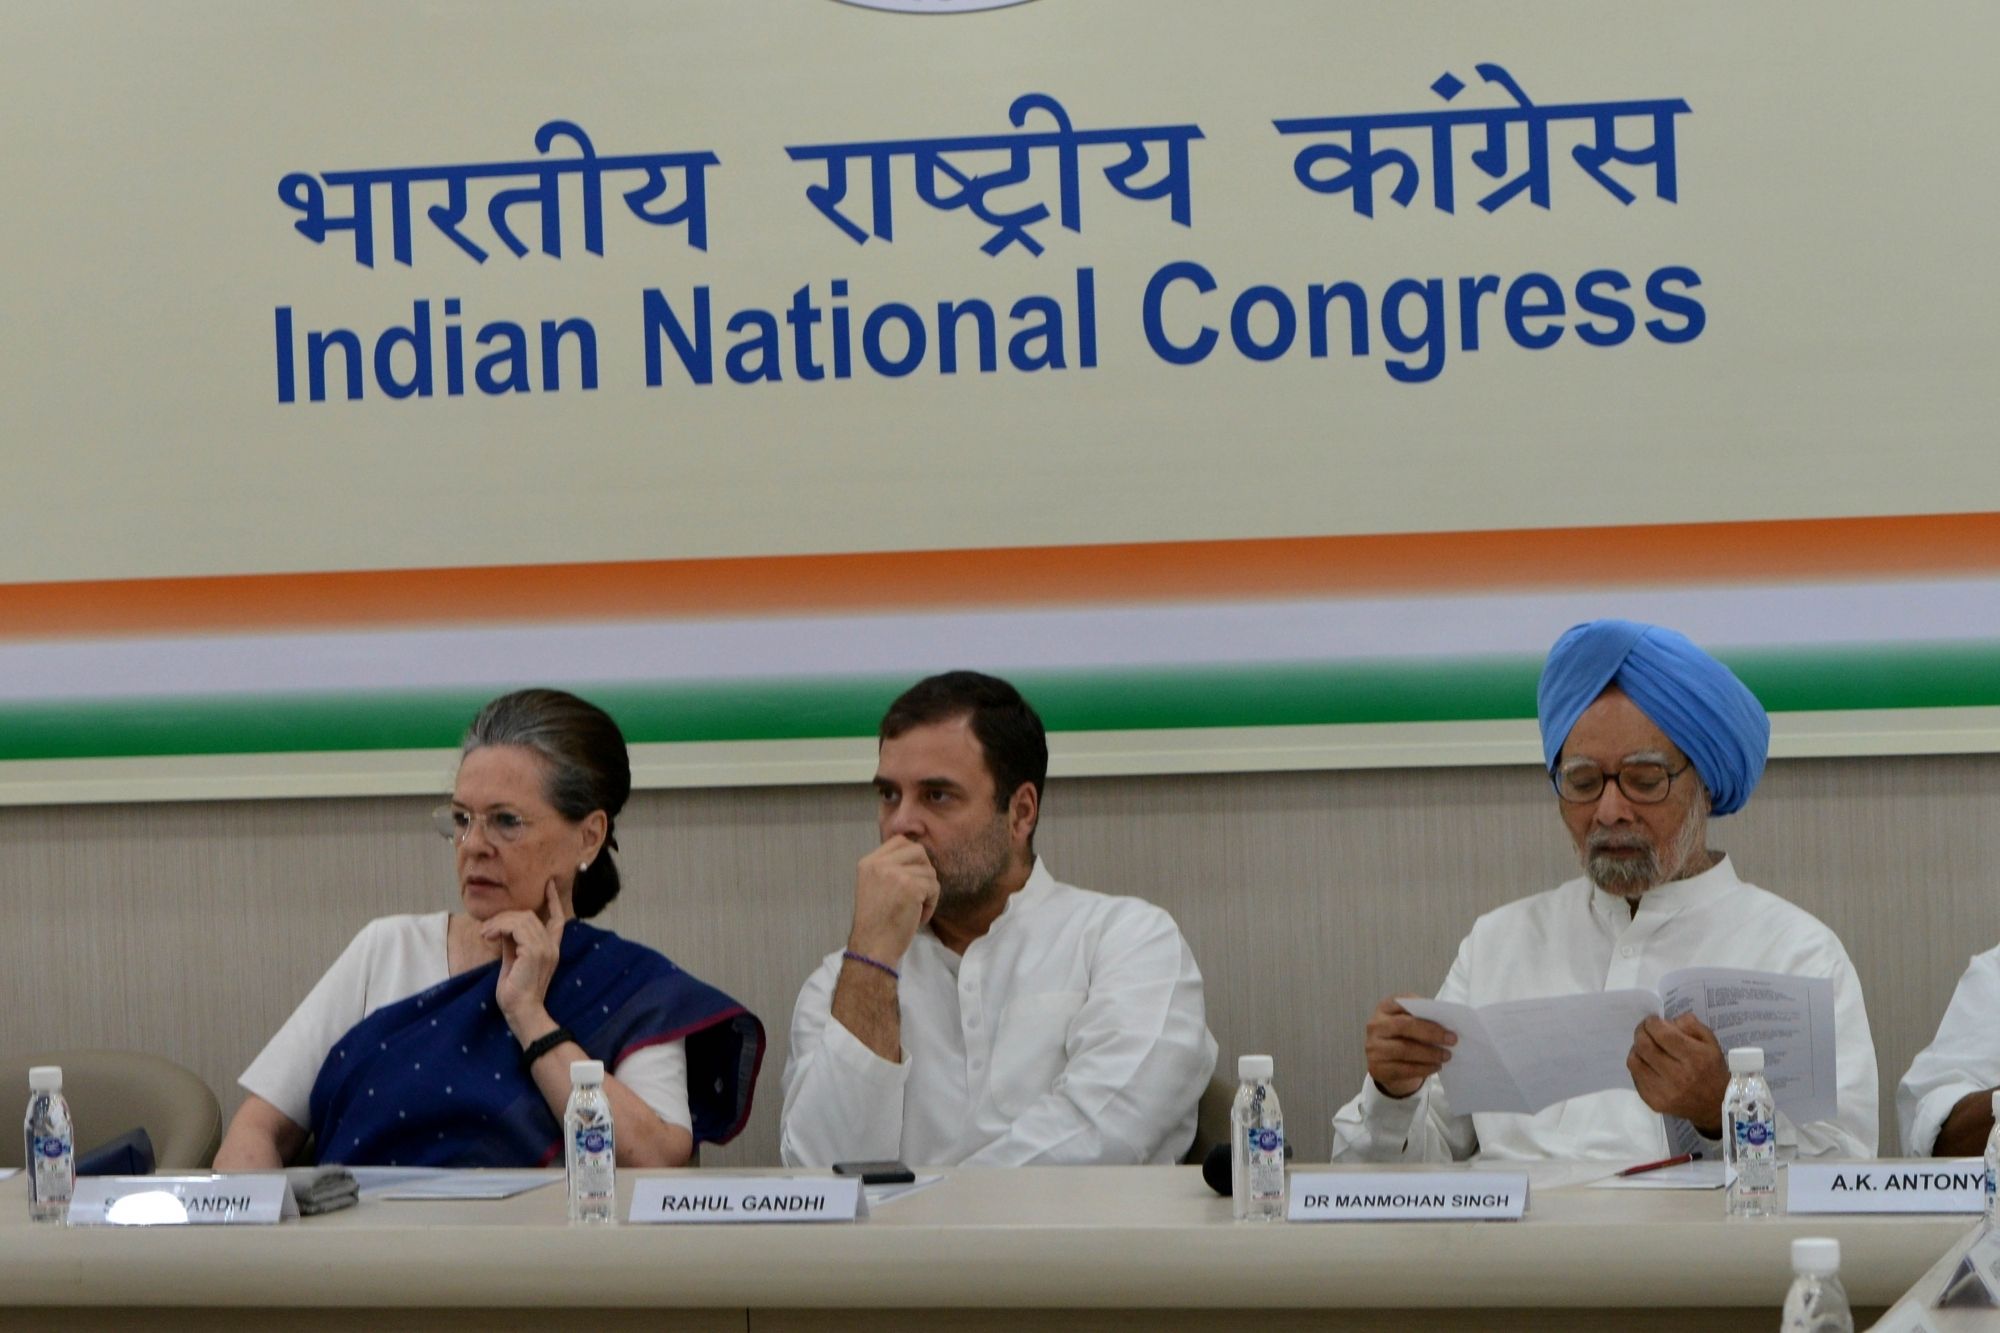 Congress leaders Sonia Gandhi, Rahul Gandhi and Manmohan Singh. (File photo)